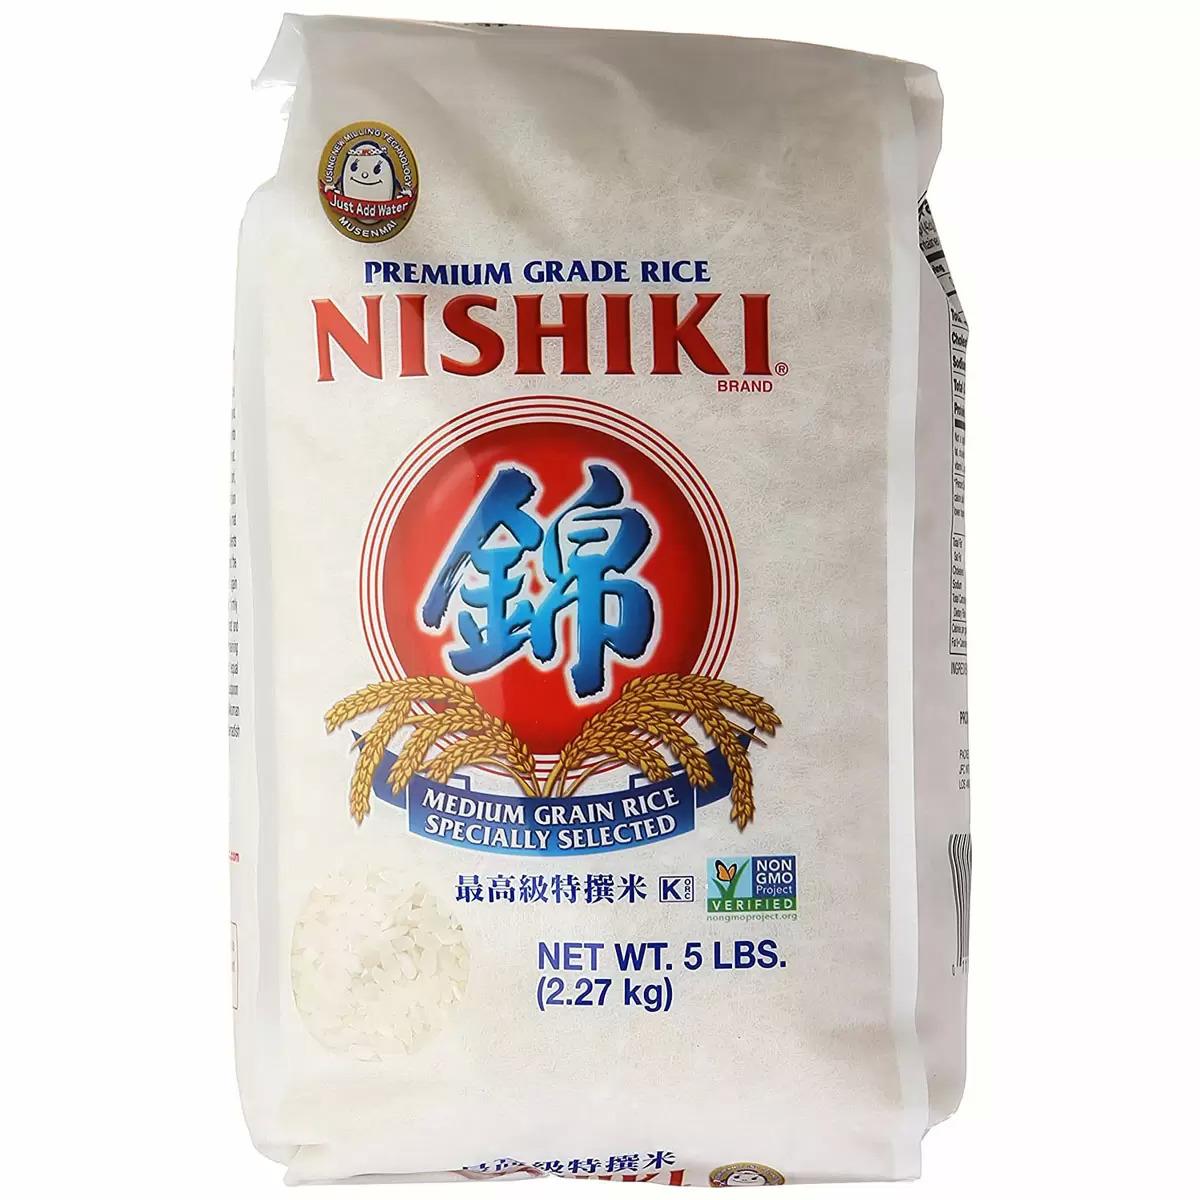 5lbs Nishiki Medium Grain Rice for $4.65 Shipped